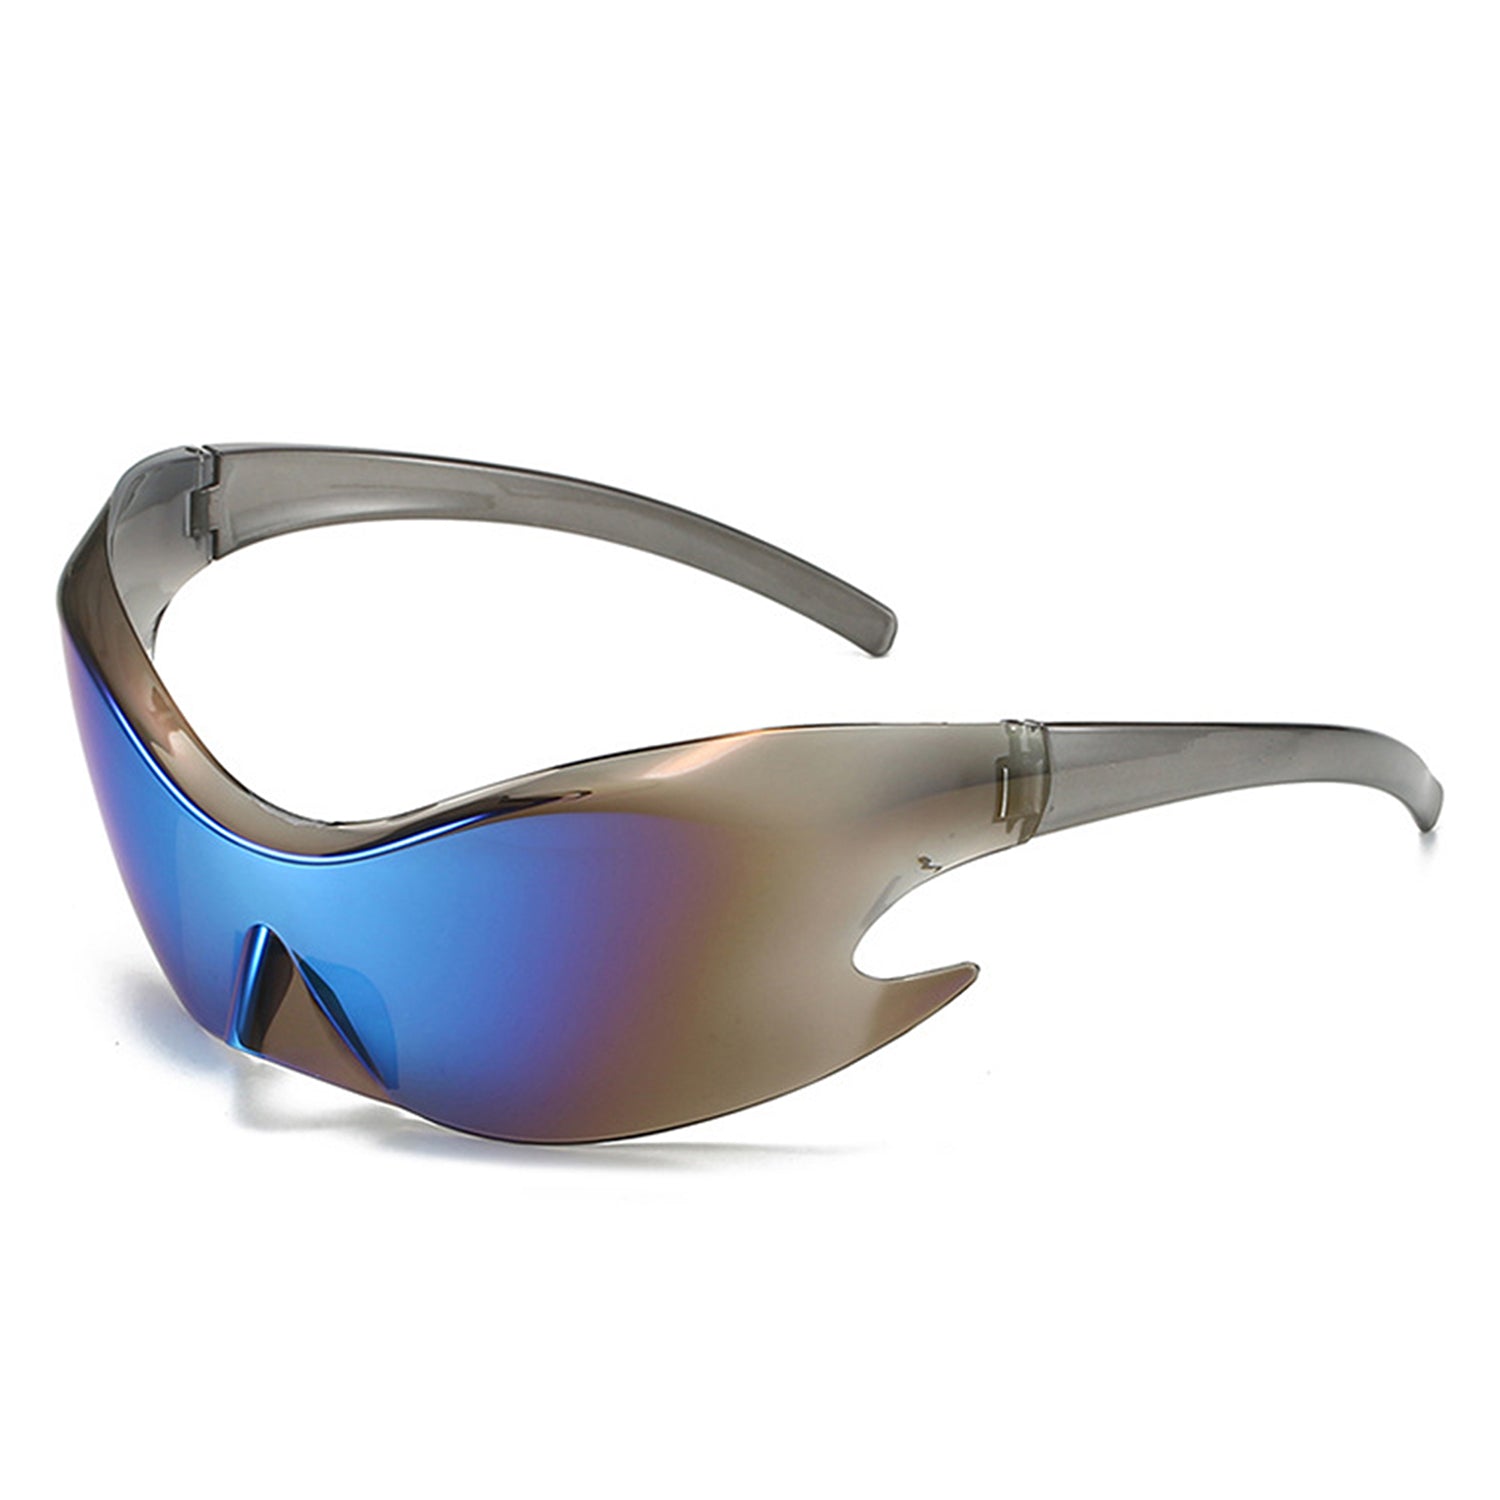 Whiestan - Futuristic Mirrored Sleek Wrap Around Sports Sunglasses Blue